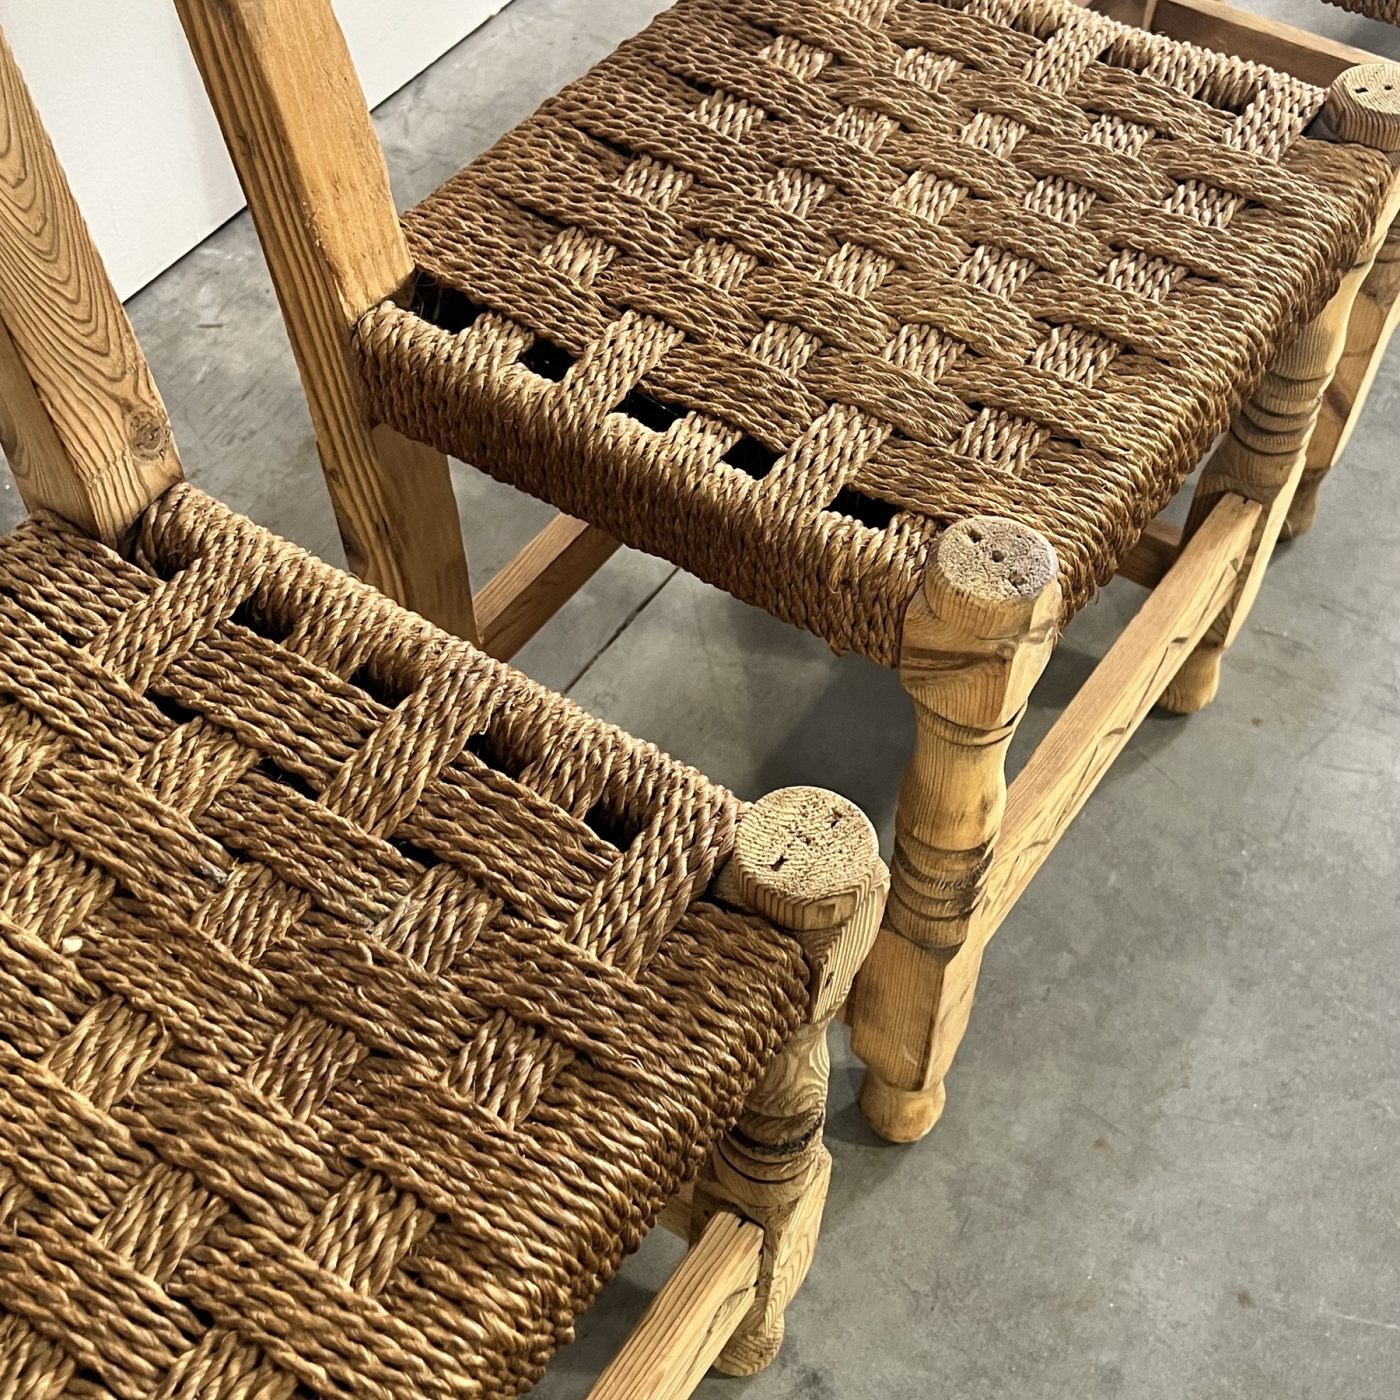 objet-vagabond-rope-chairs0005